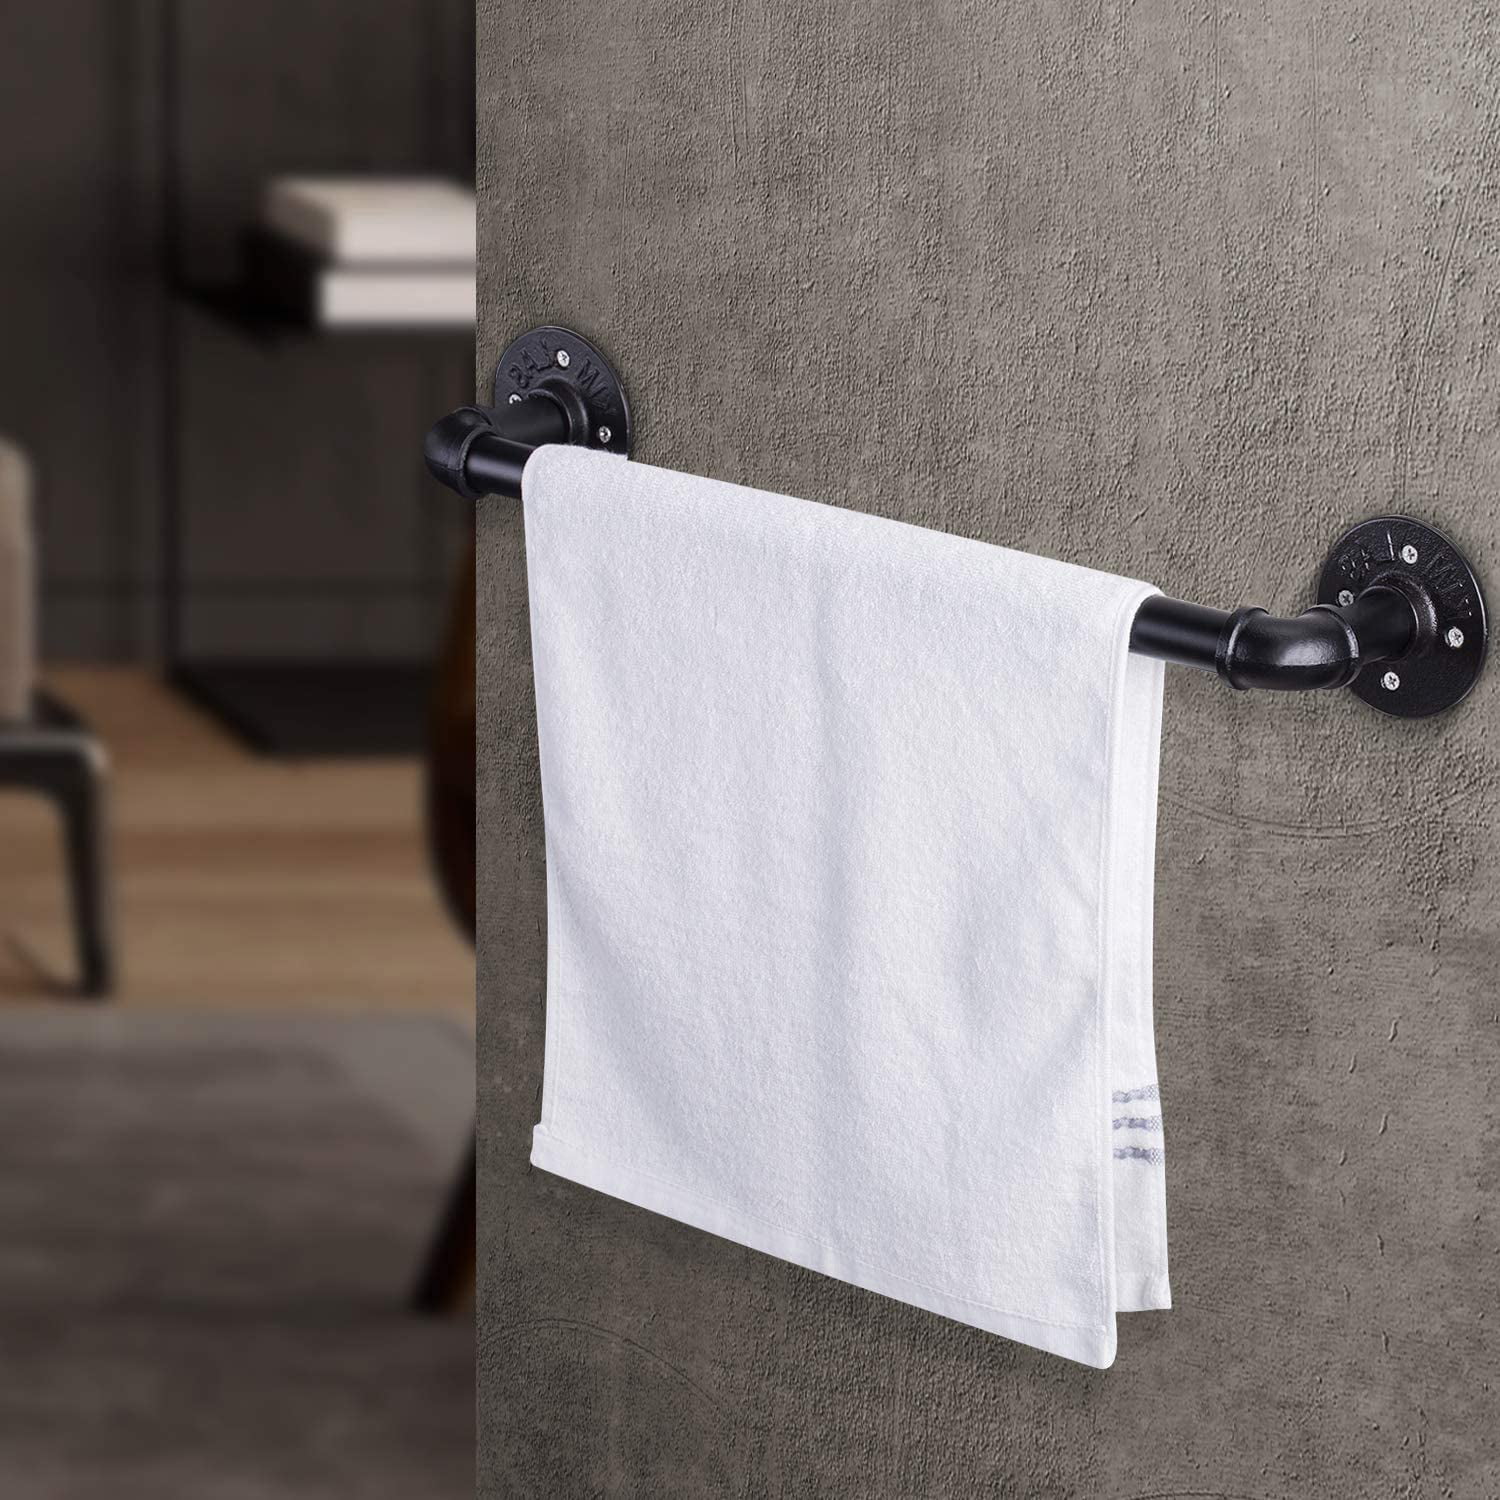 18 Inch Industrial Pipe Towel Bar Bathroom Hardware Wall Mount Rack Holder 